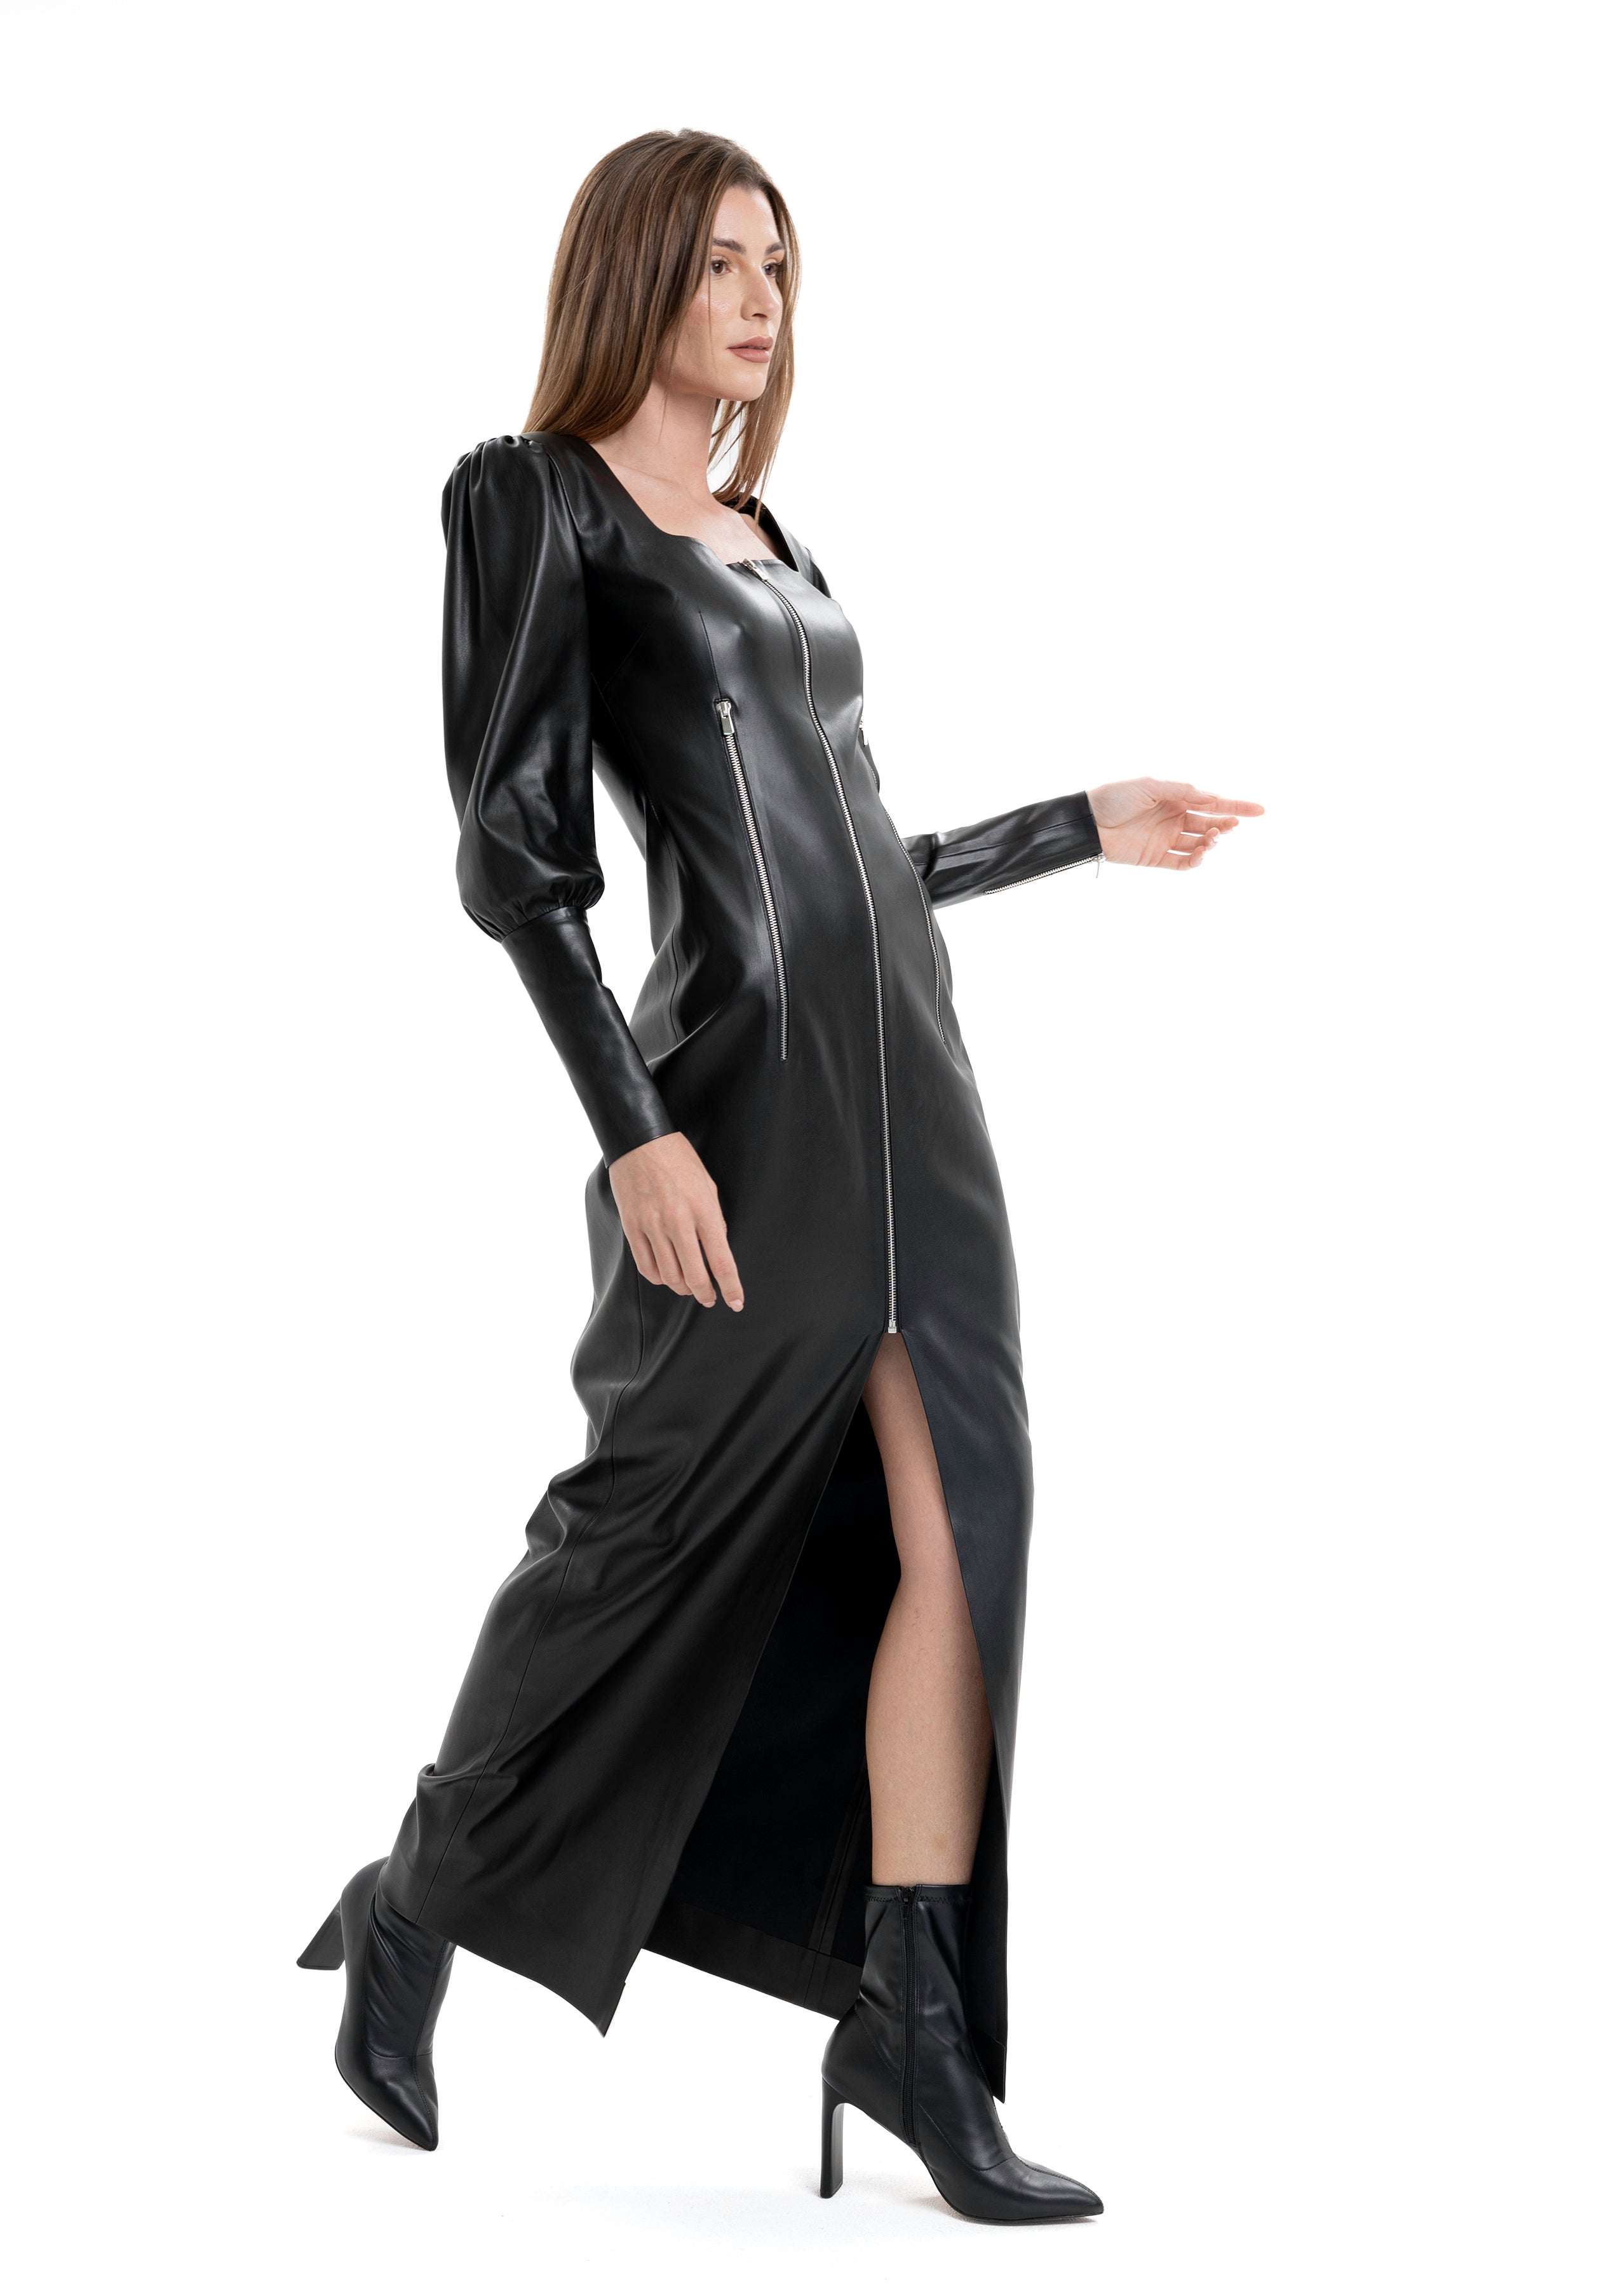 The Dramatic Vegan Leather Dress by Lili Blanc